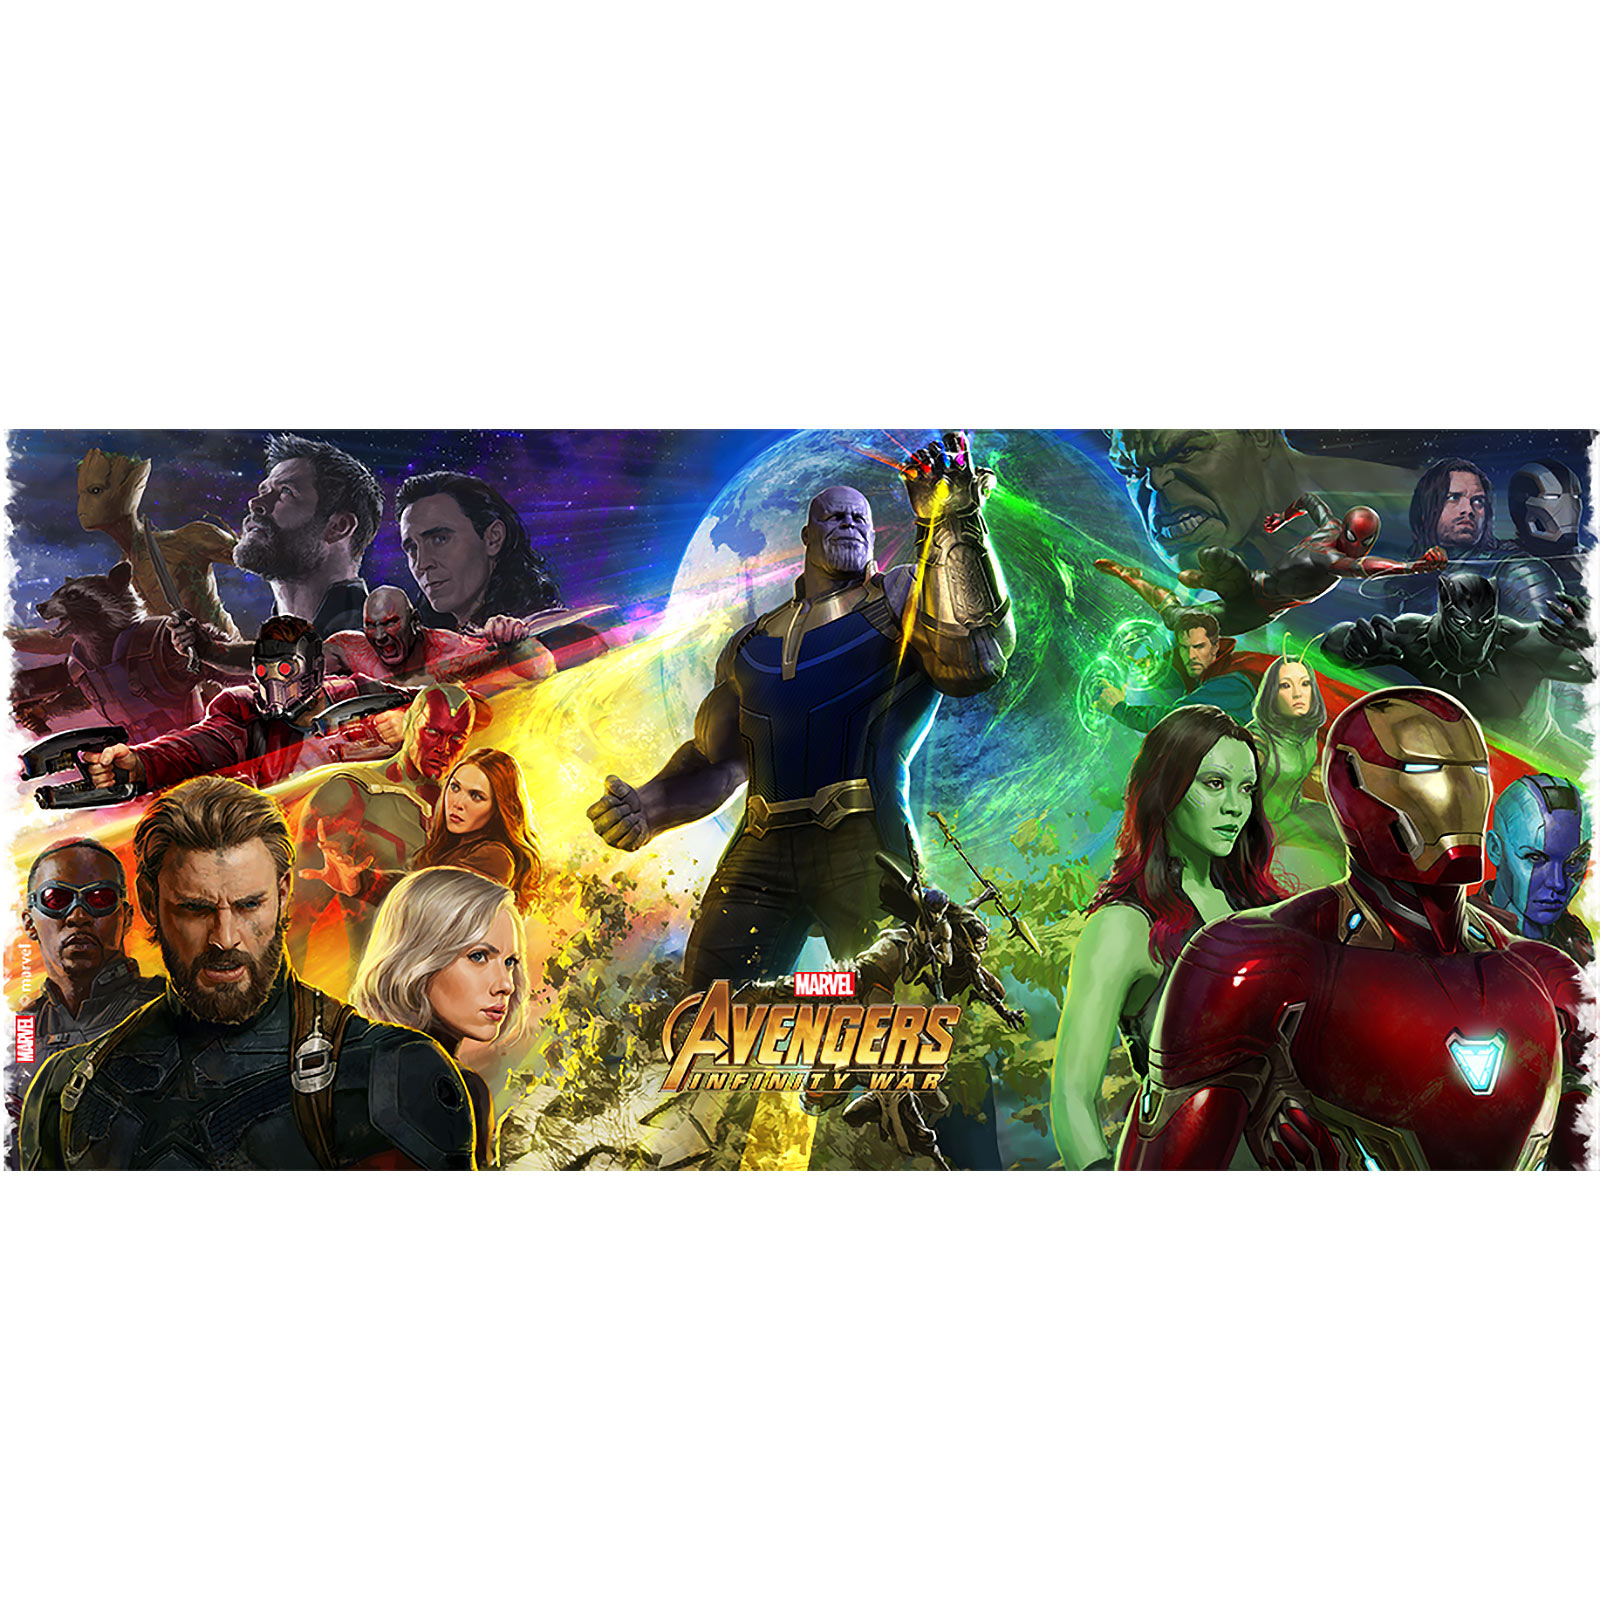 Avengers - Infinity War Collage Mug